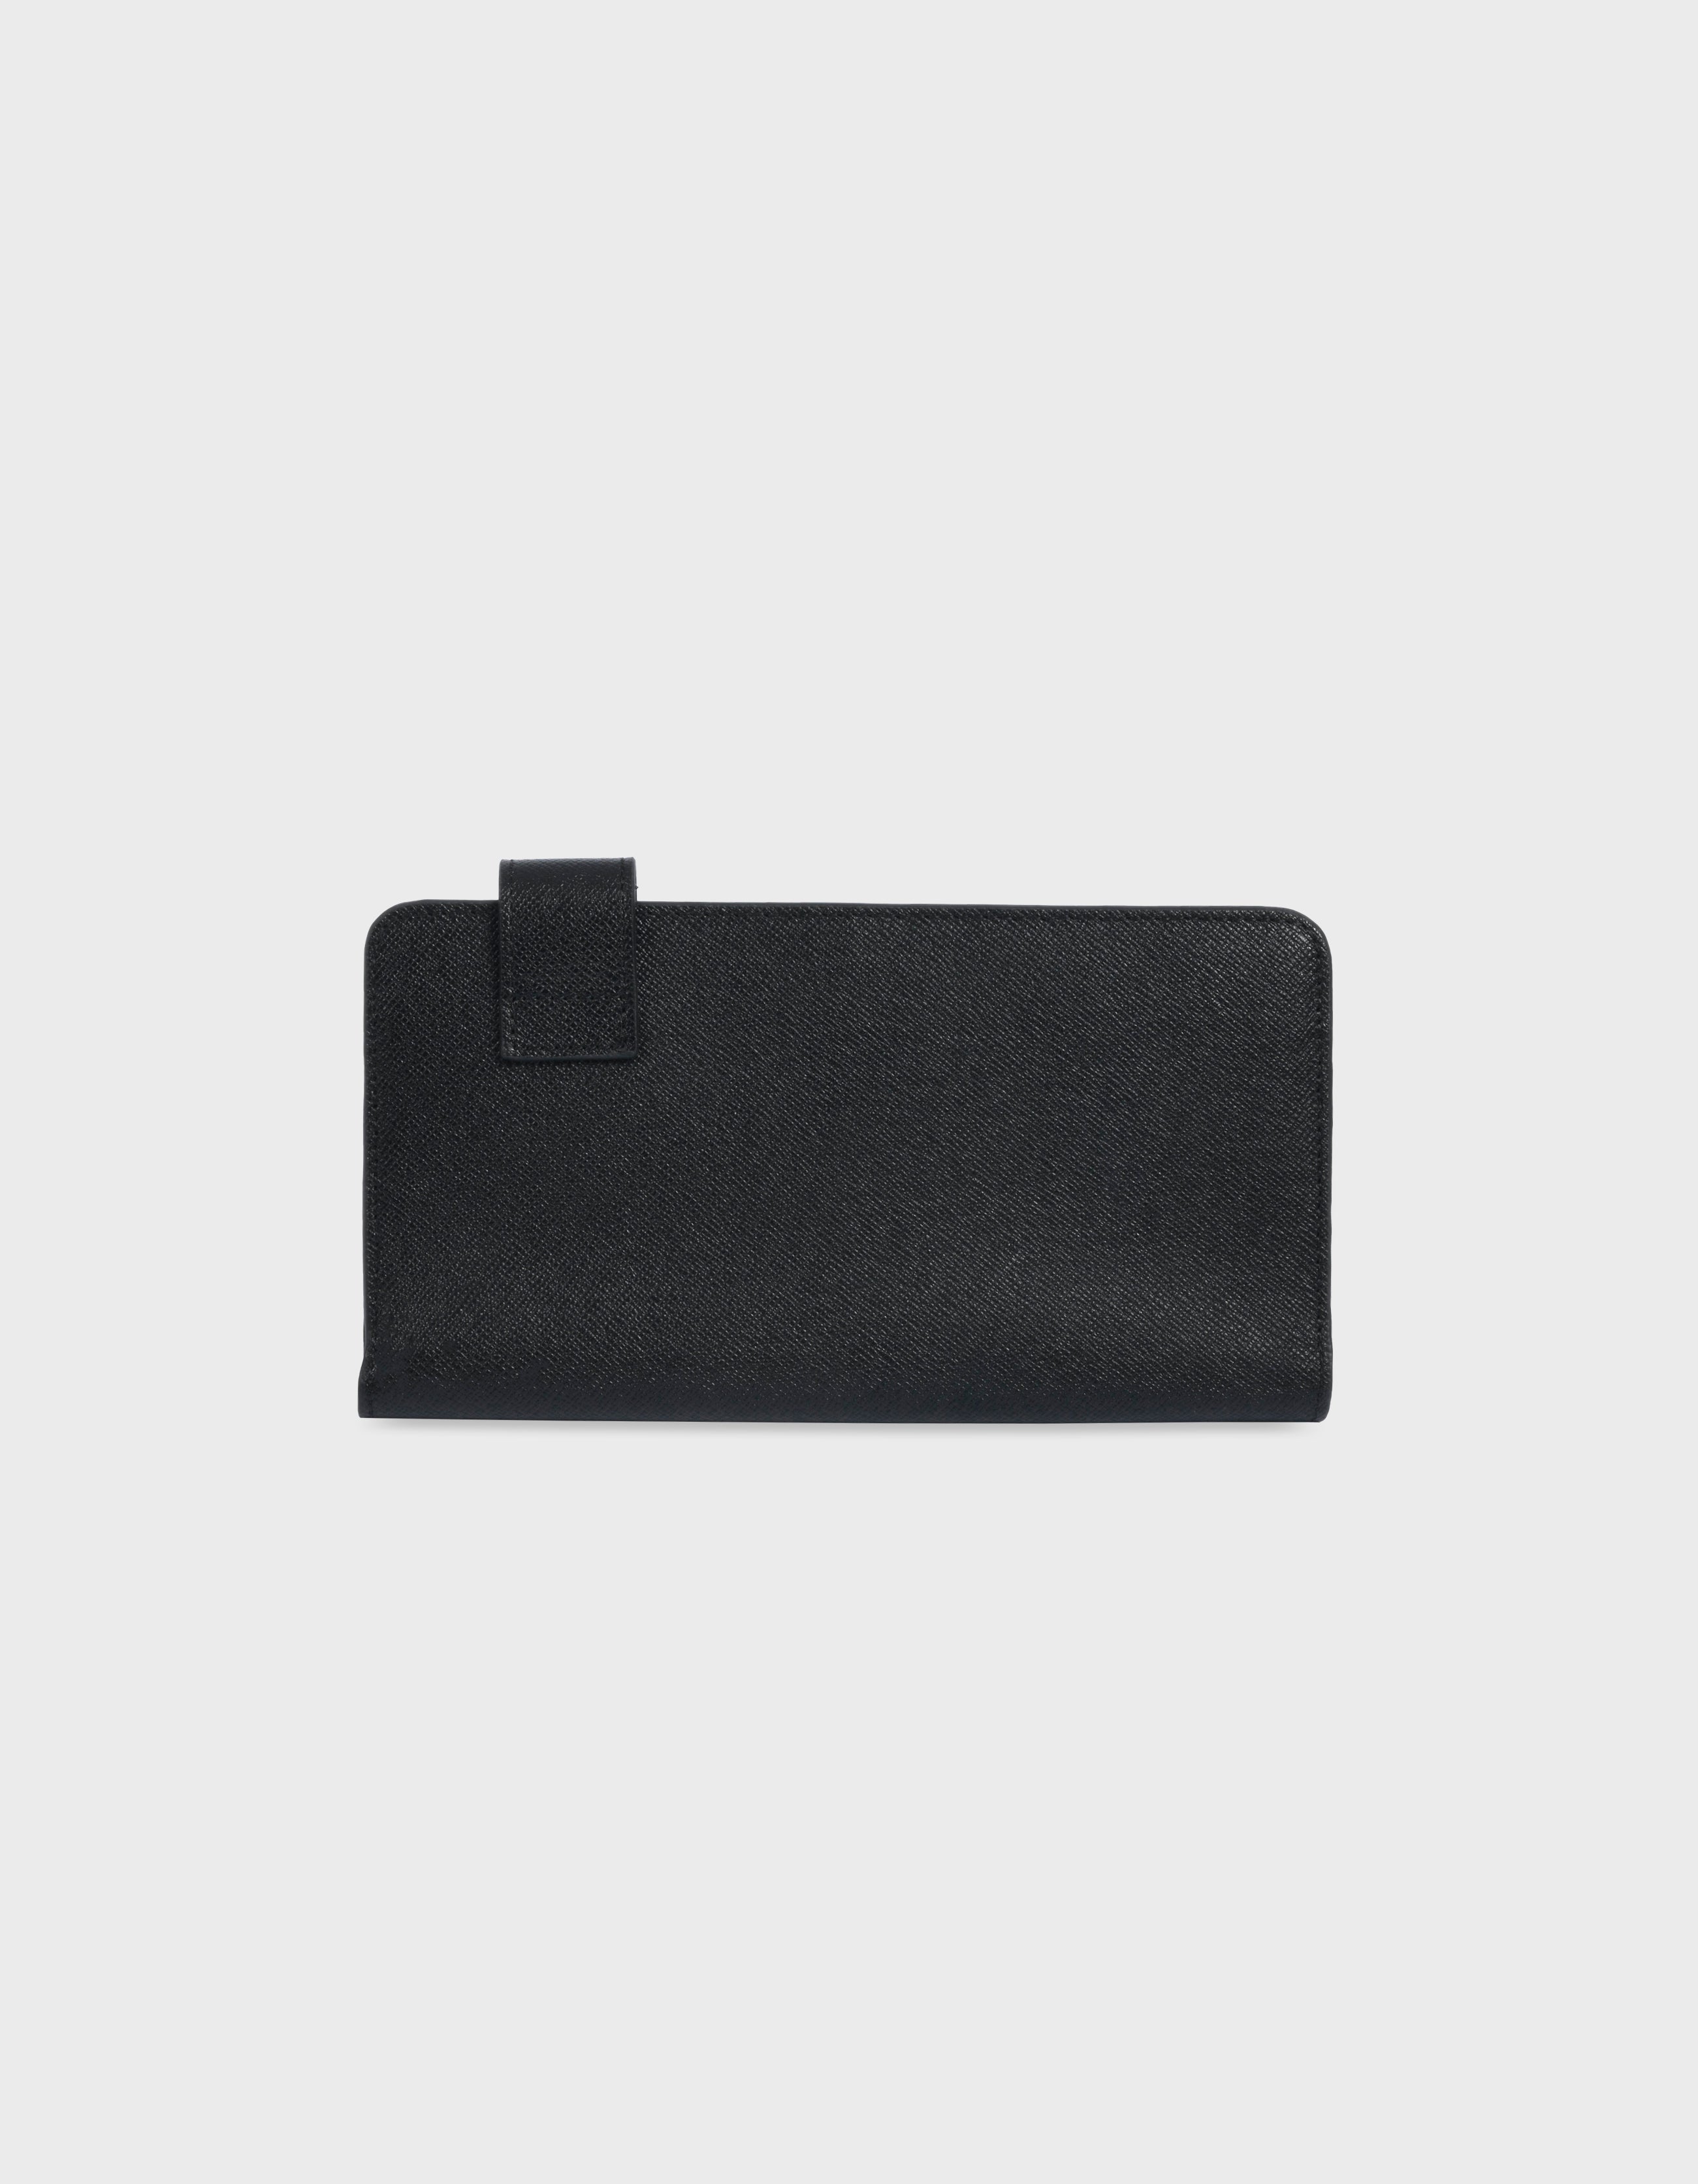 HiVa Atelier | Fluctus Long Wallet Black | Beautiful and Versatile